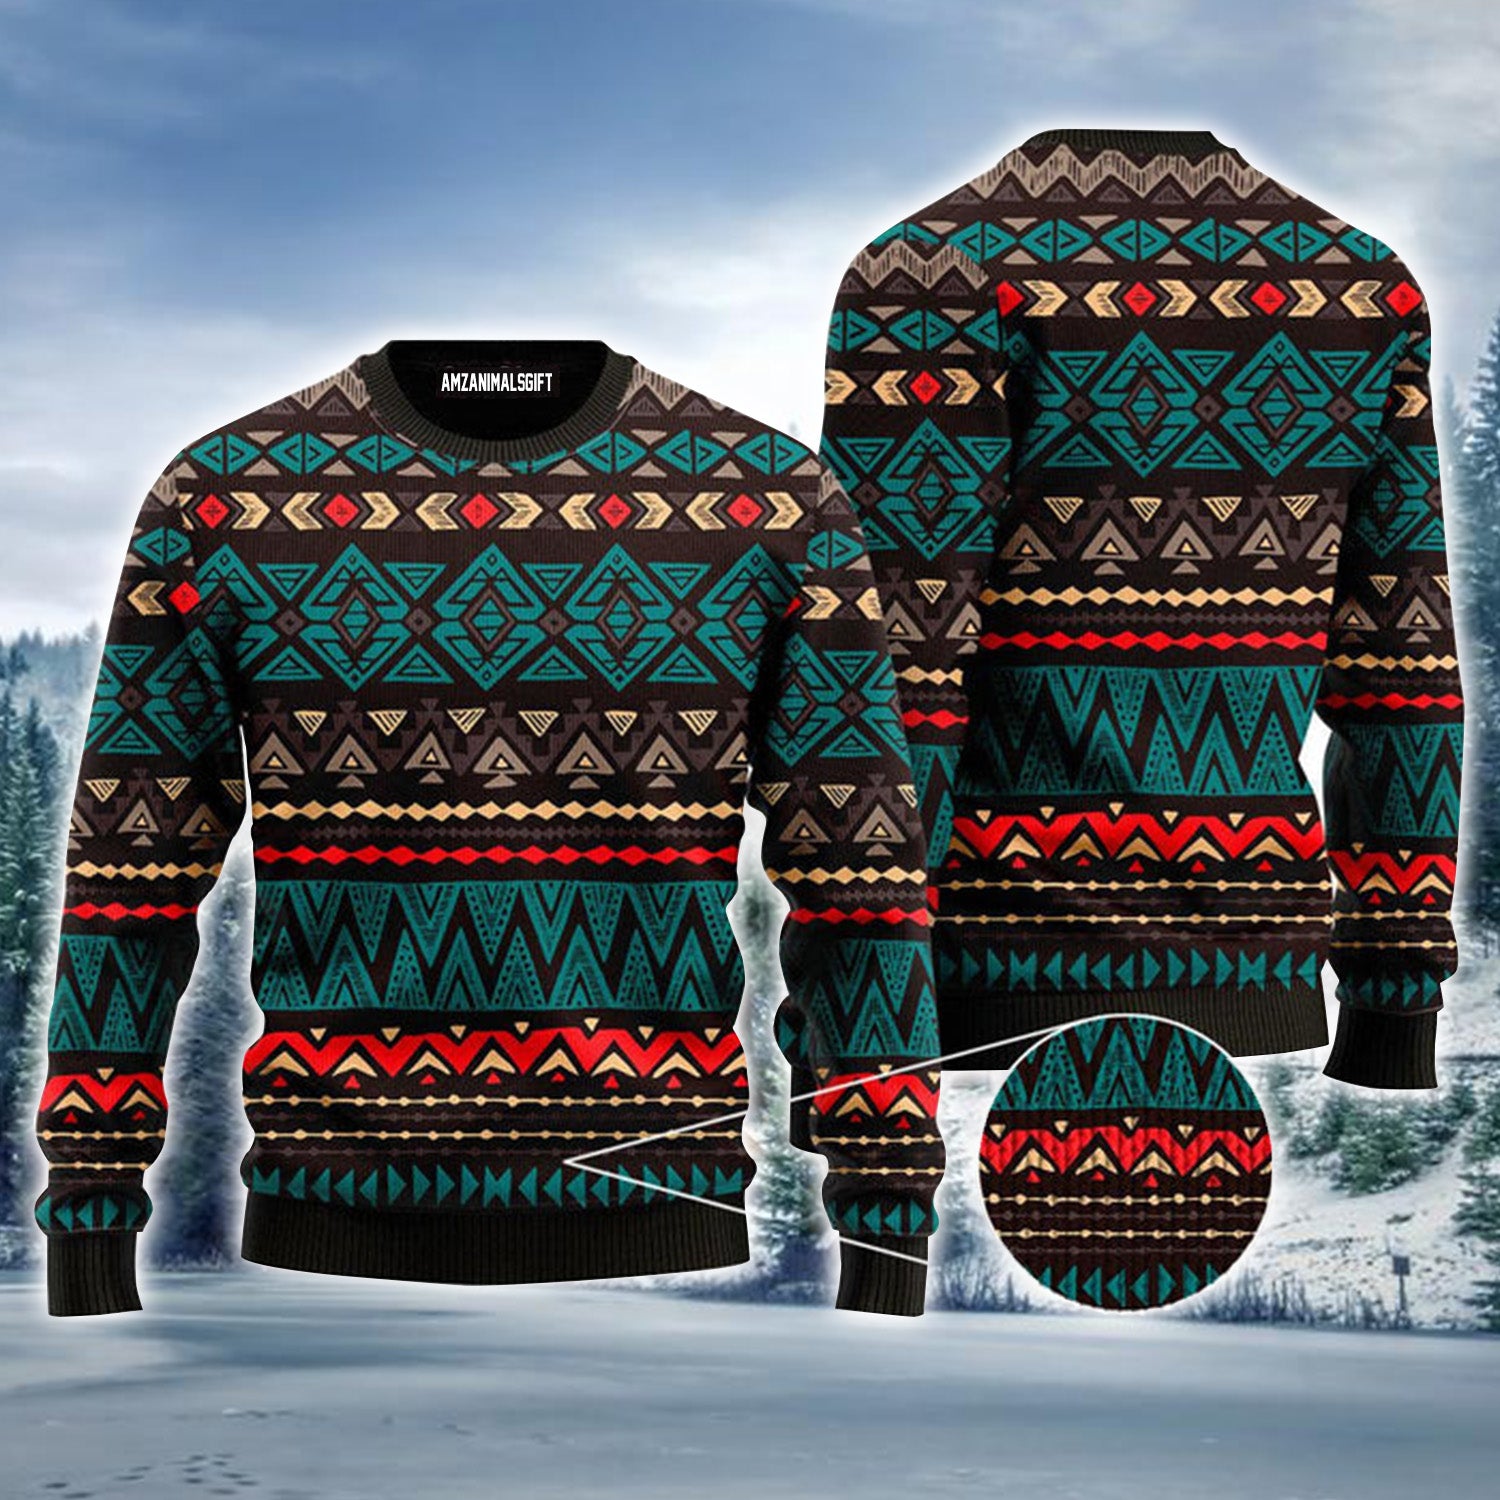 Native Aztec Navajo Urly Christmas Sweater, Christmas Sweater For Men & Women - Perfect Gift For Christmas, New Year, Winter Holiday